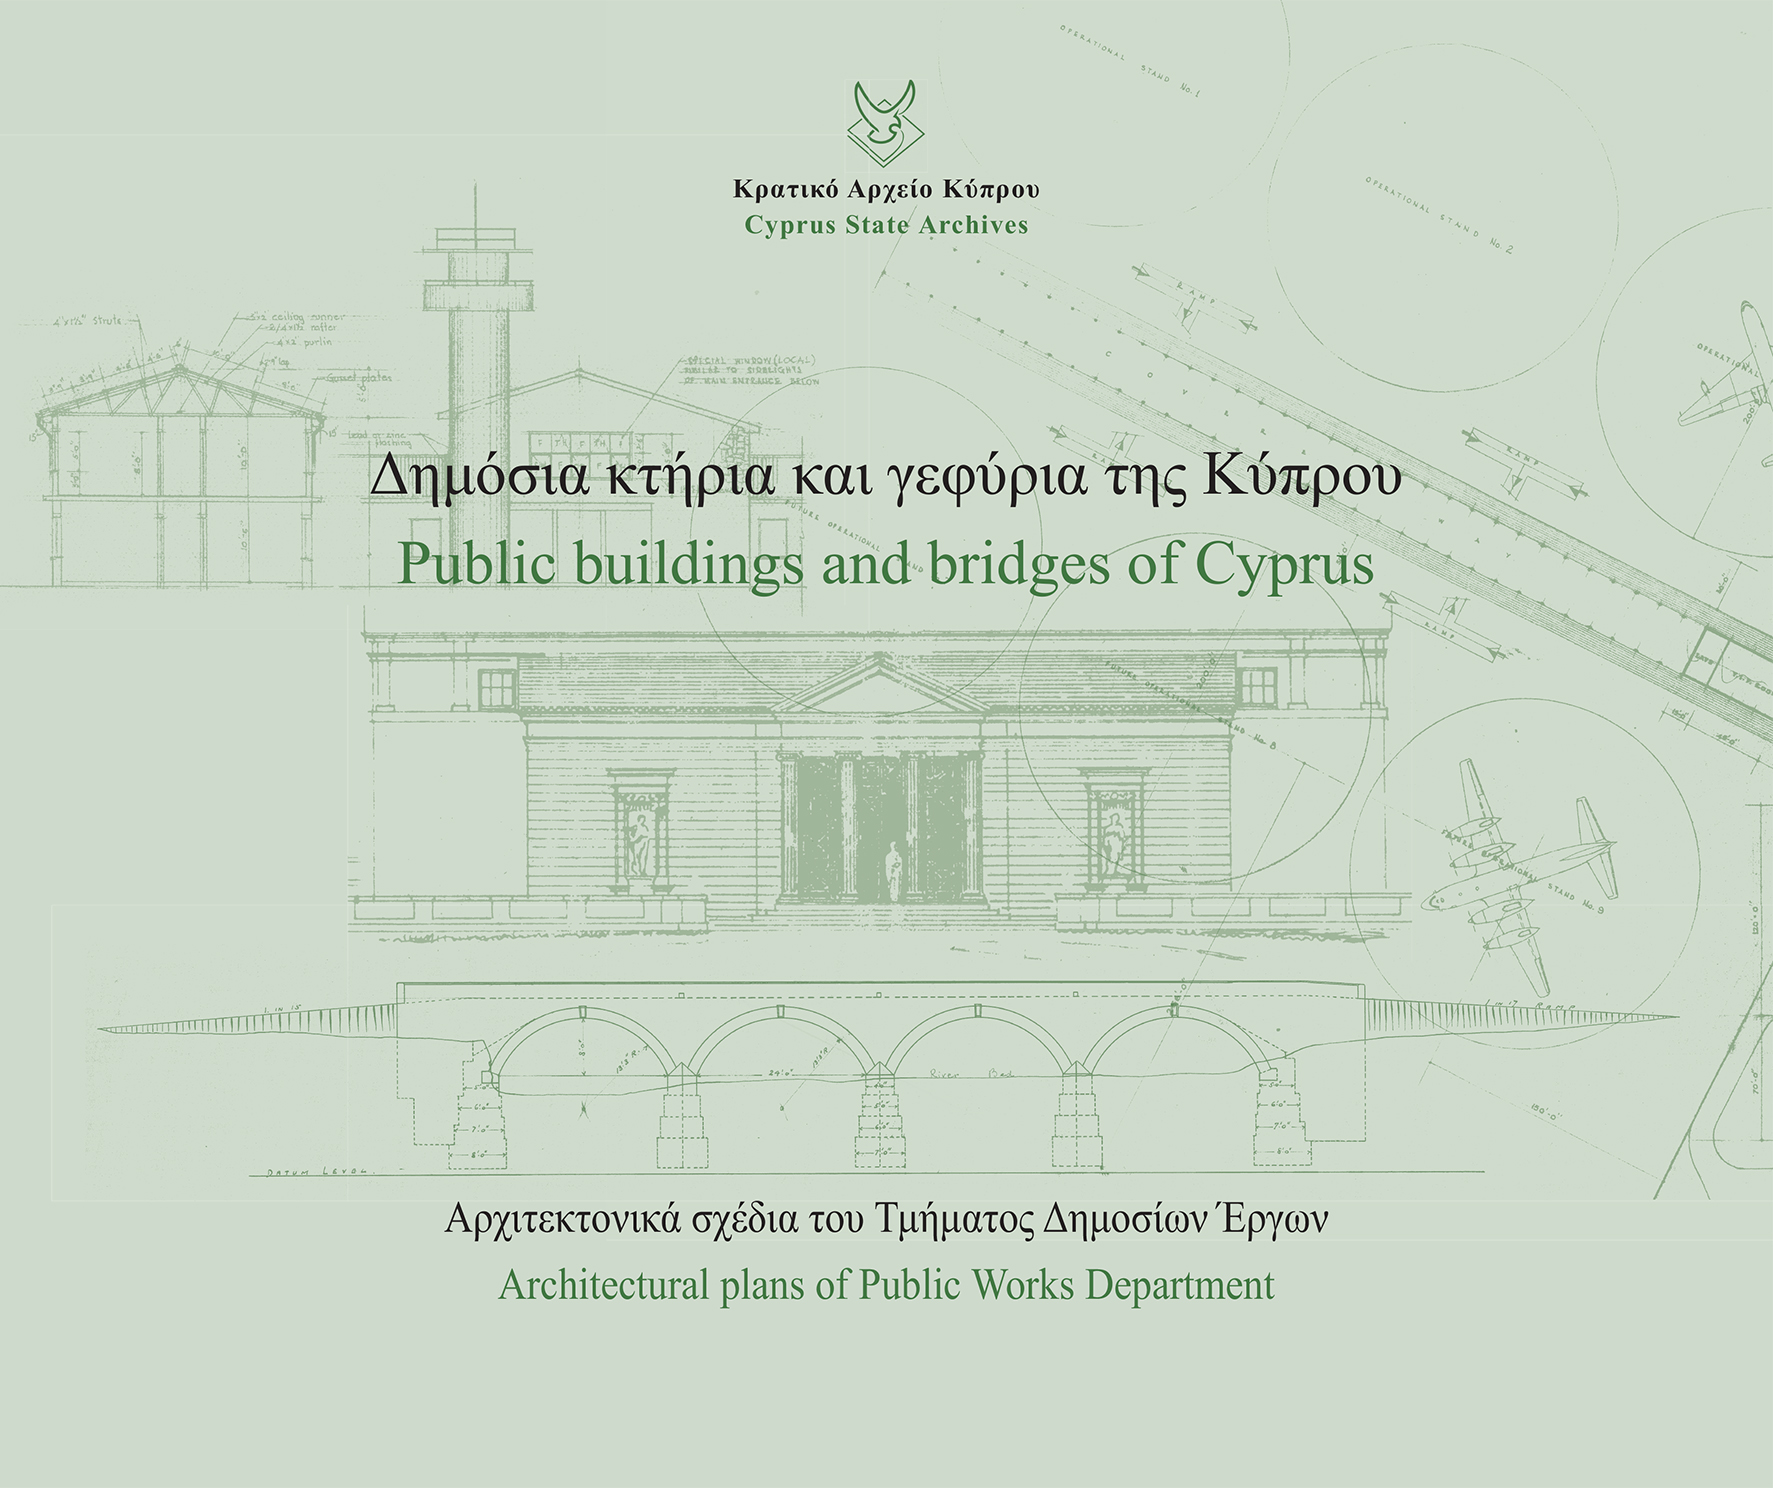 Public buildings and bridges of Cyprus, Architectural plans of Public Works Department